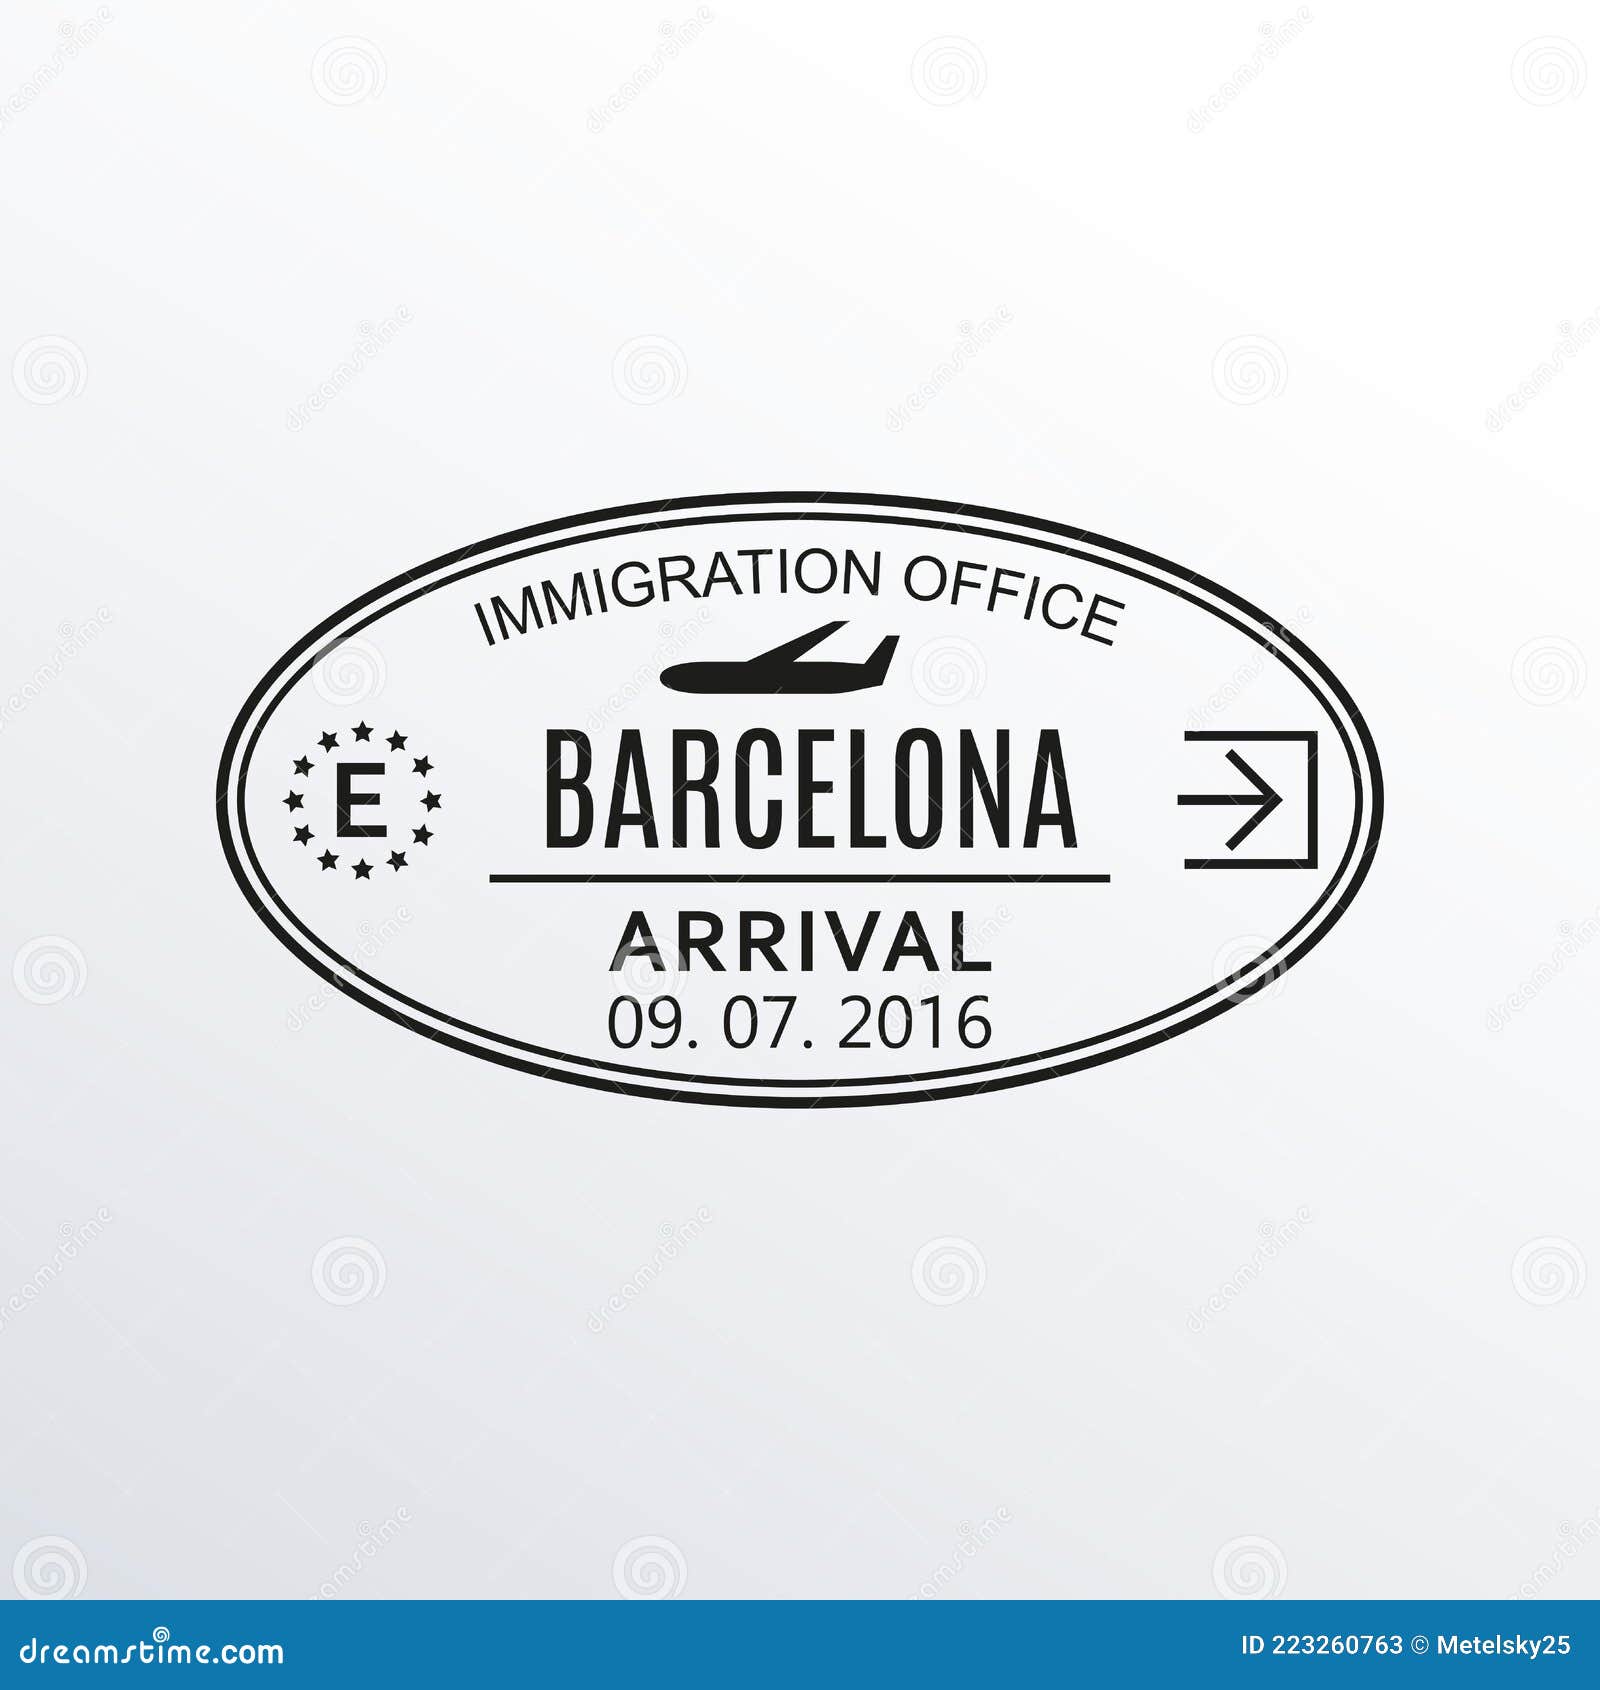 barcelona passport stamp. spain airport visa stamp or immigration sign. custom control cachet.  .